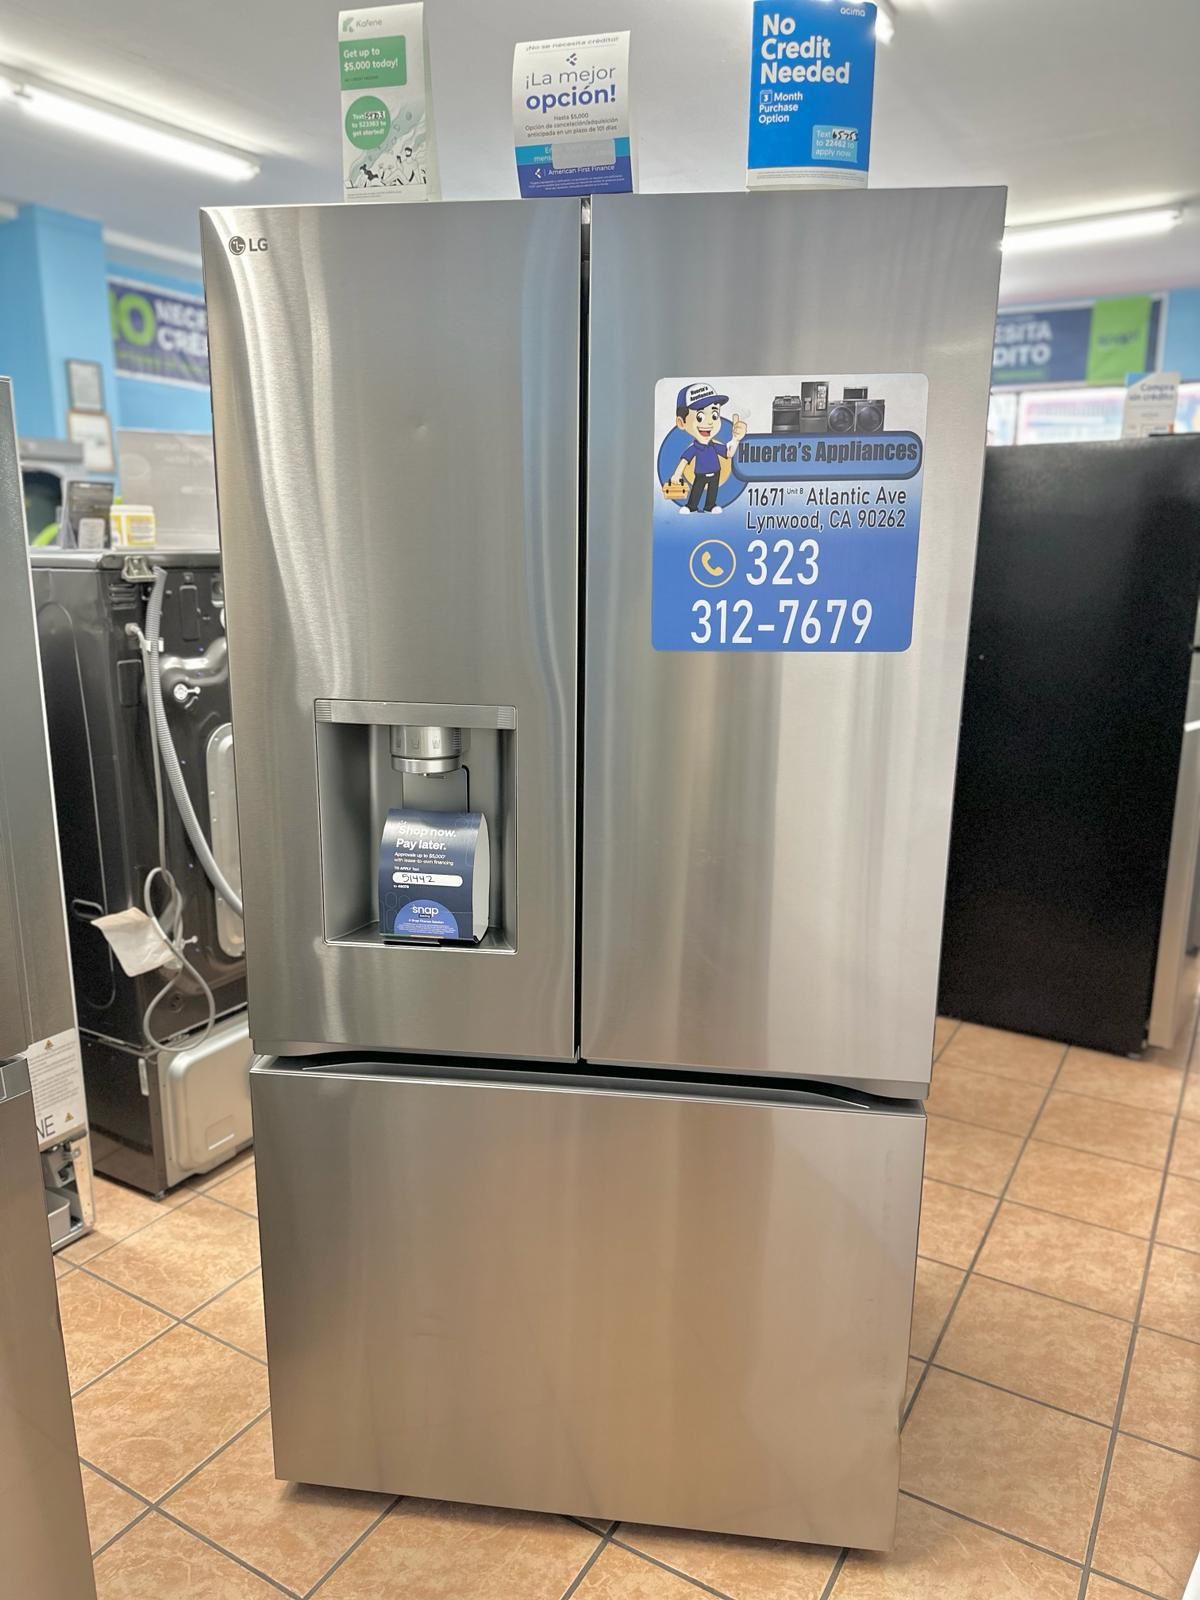 LG Refrigerator Smart Counter Depth